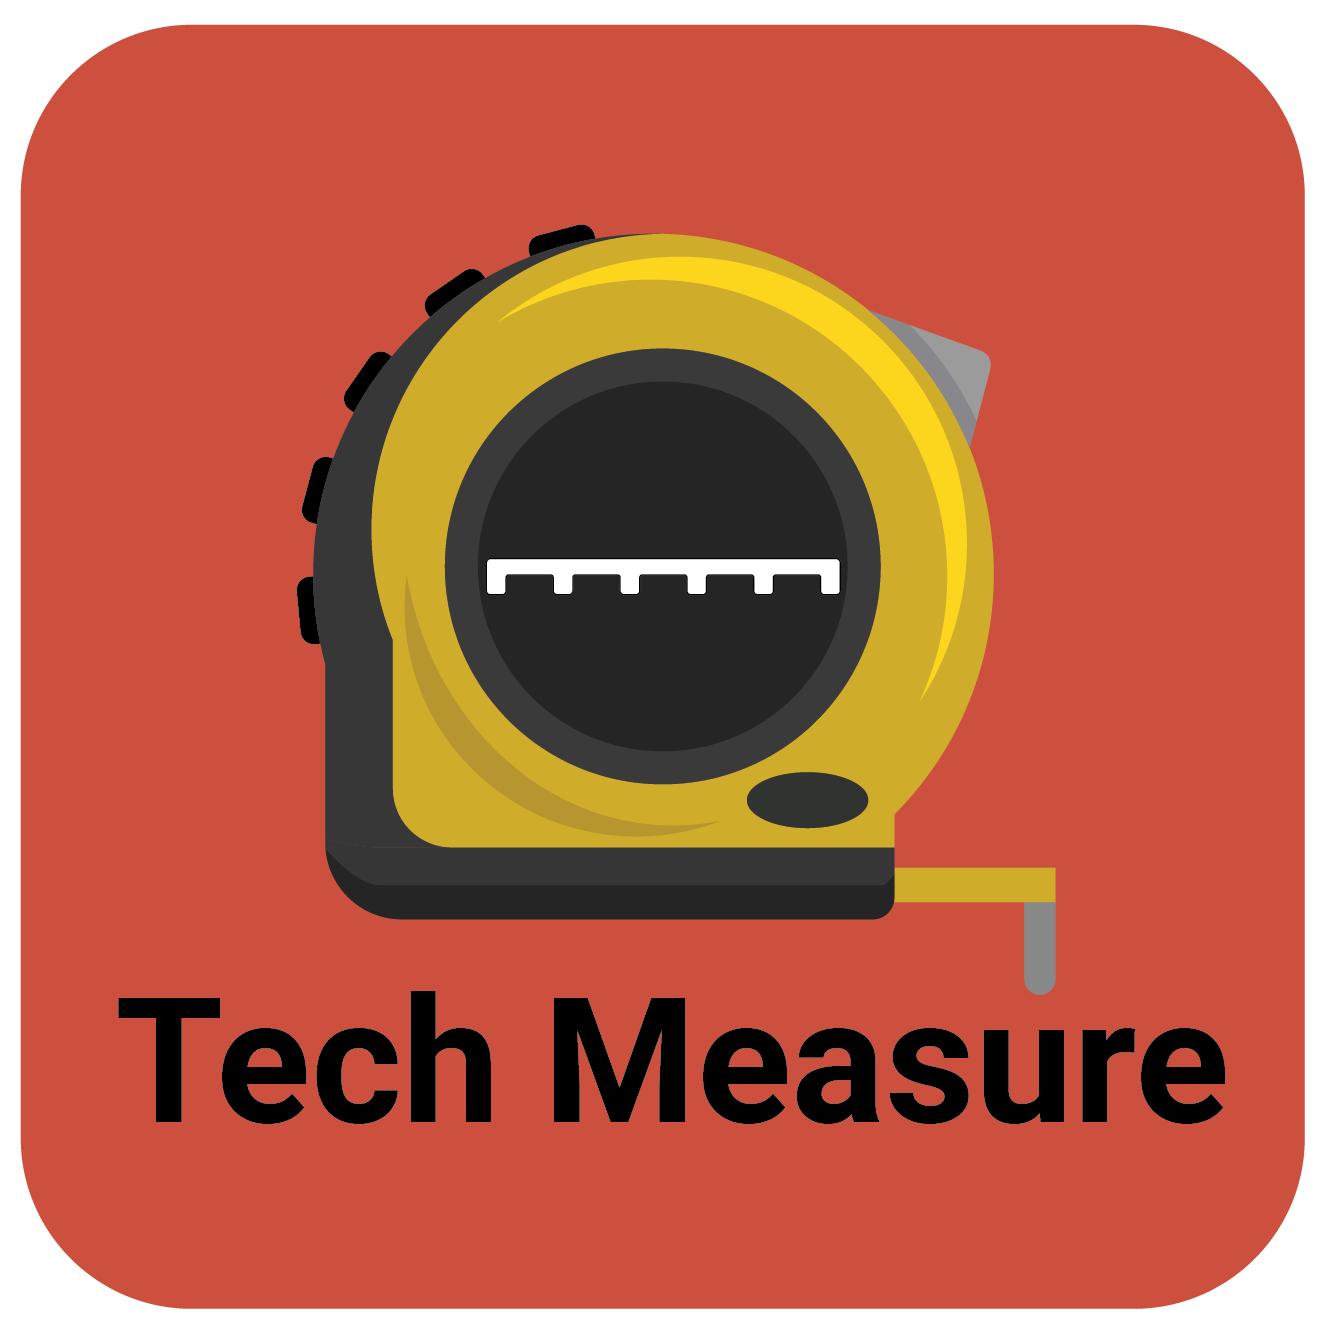 Tech Measure